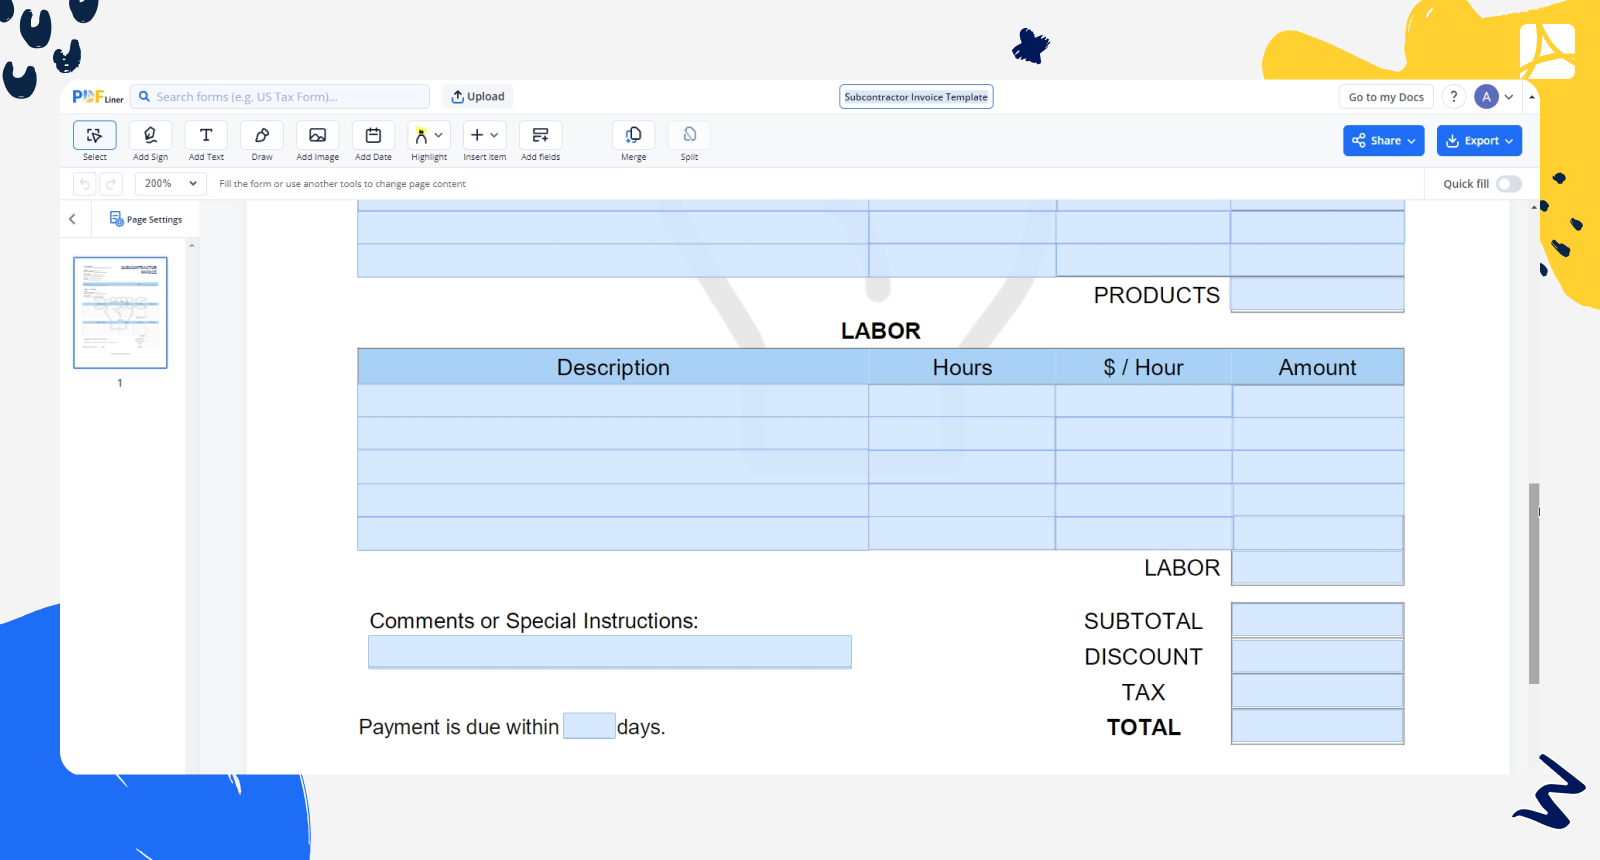 Subcontractor Invoice Template (1) screenshot